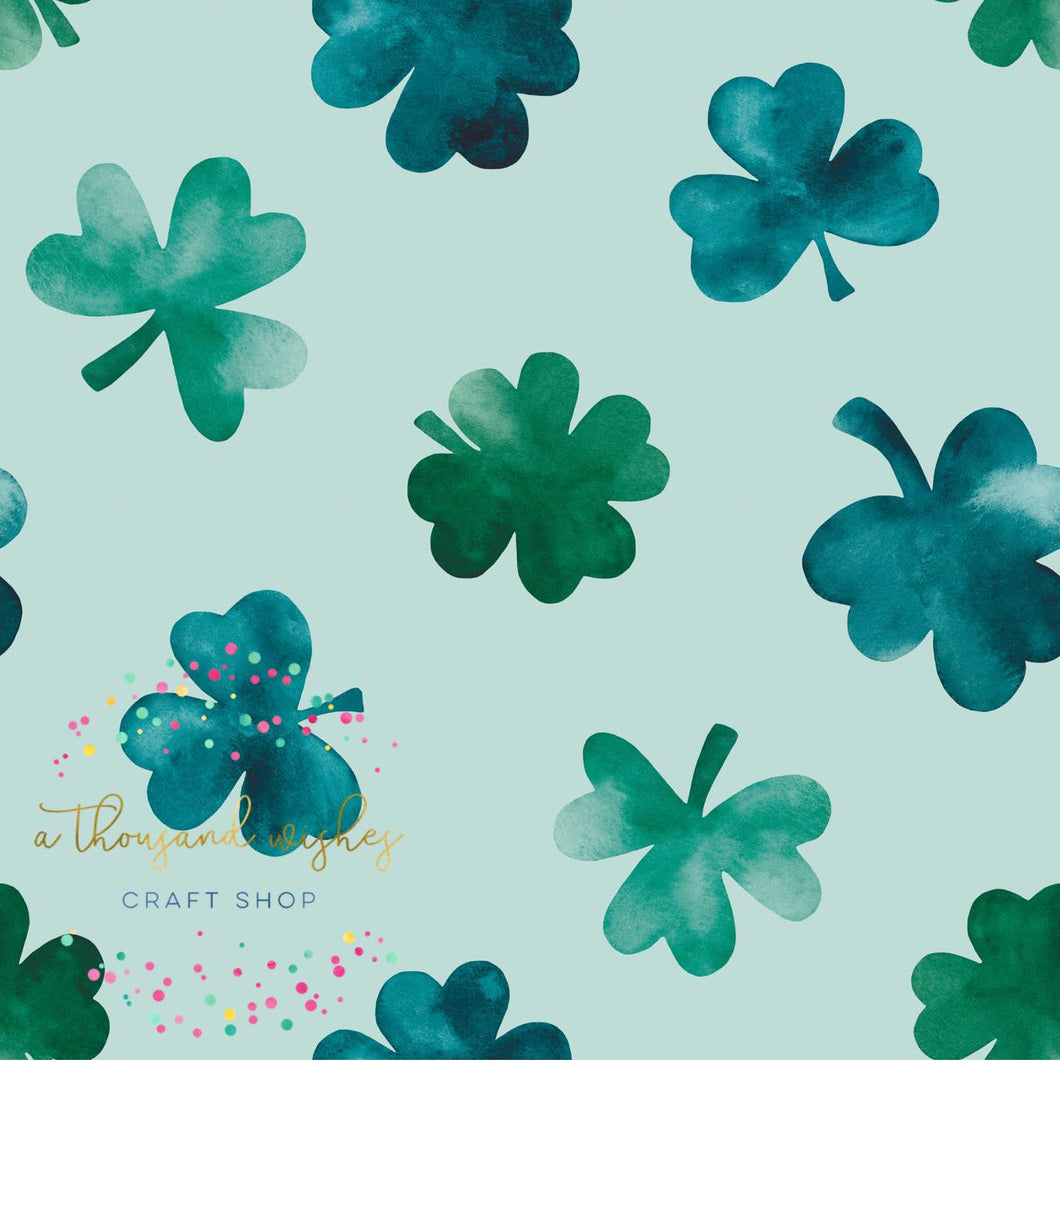 [CATE & RAINN] SHAMROCKS MINT BLUE - St. Patrick's Day Collection